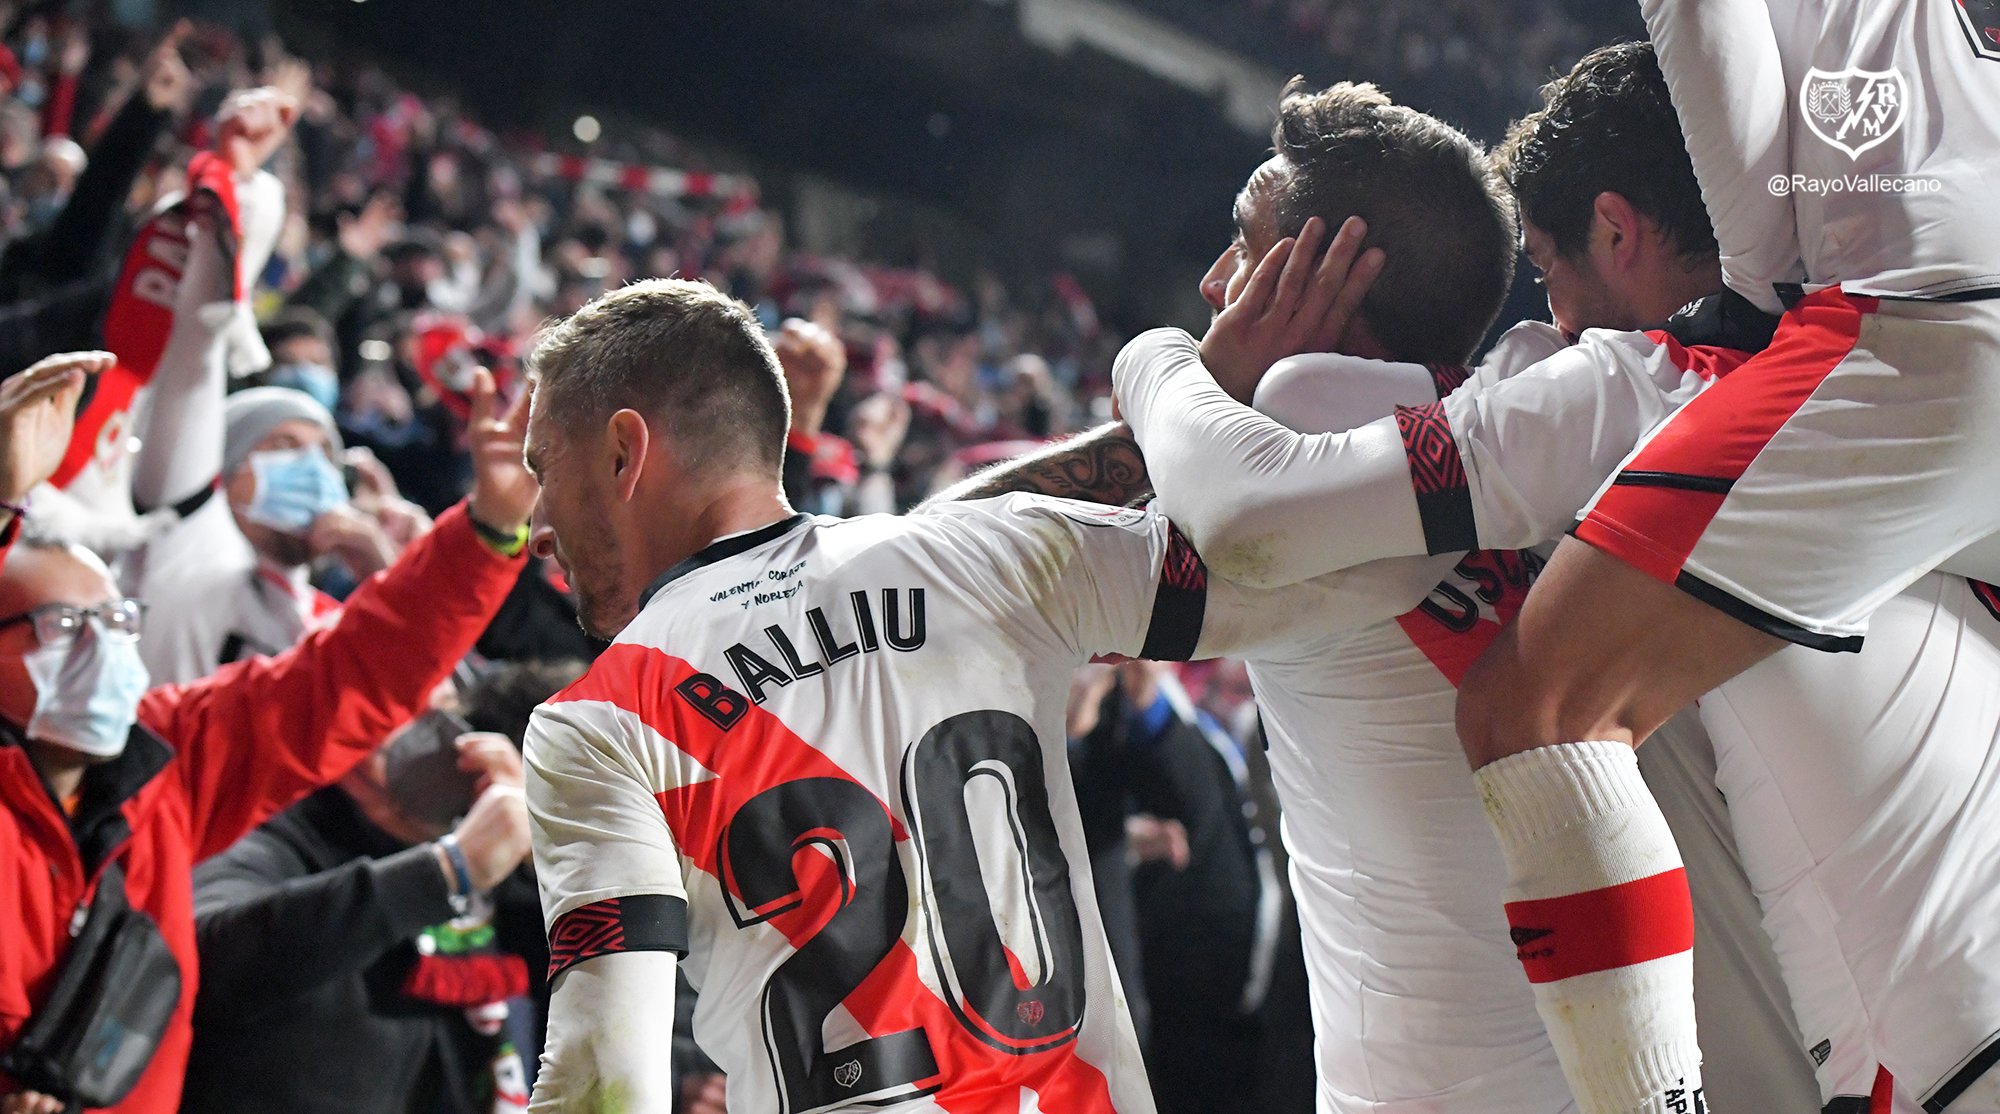 Rayo Vallecano beat Mallorca 1-0 to progress to the semi-final of the Copa del Rey